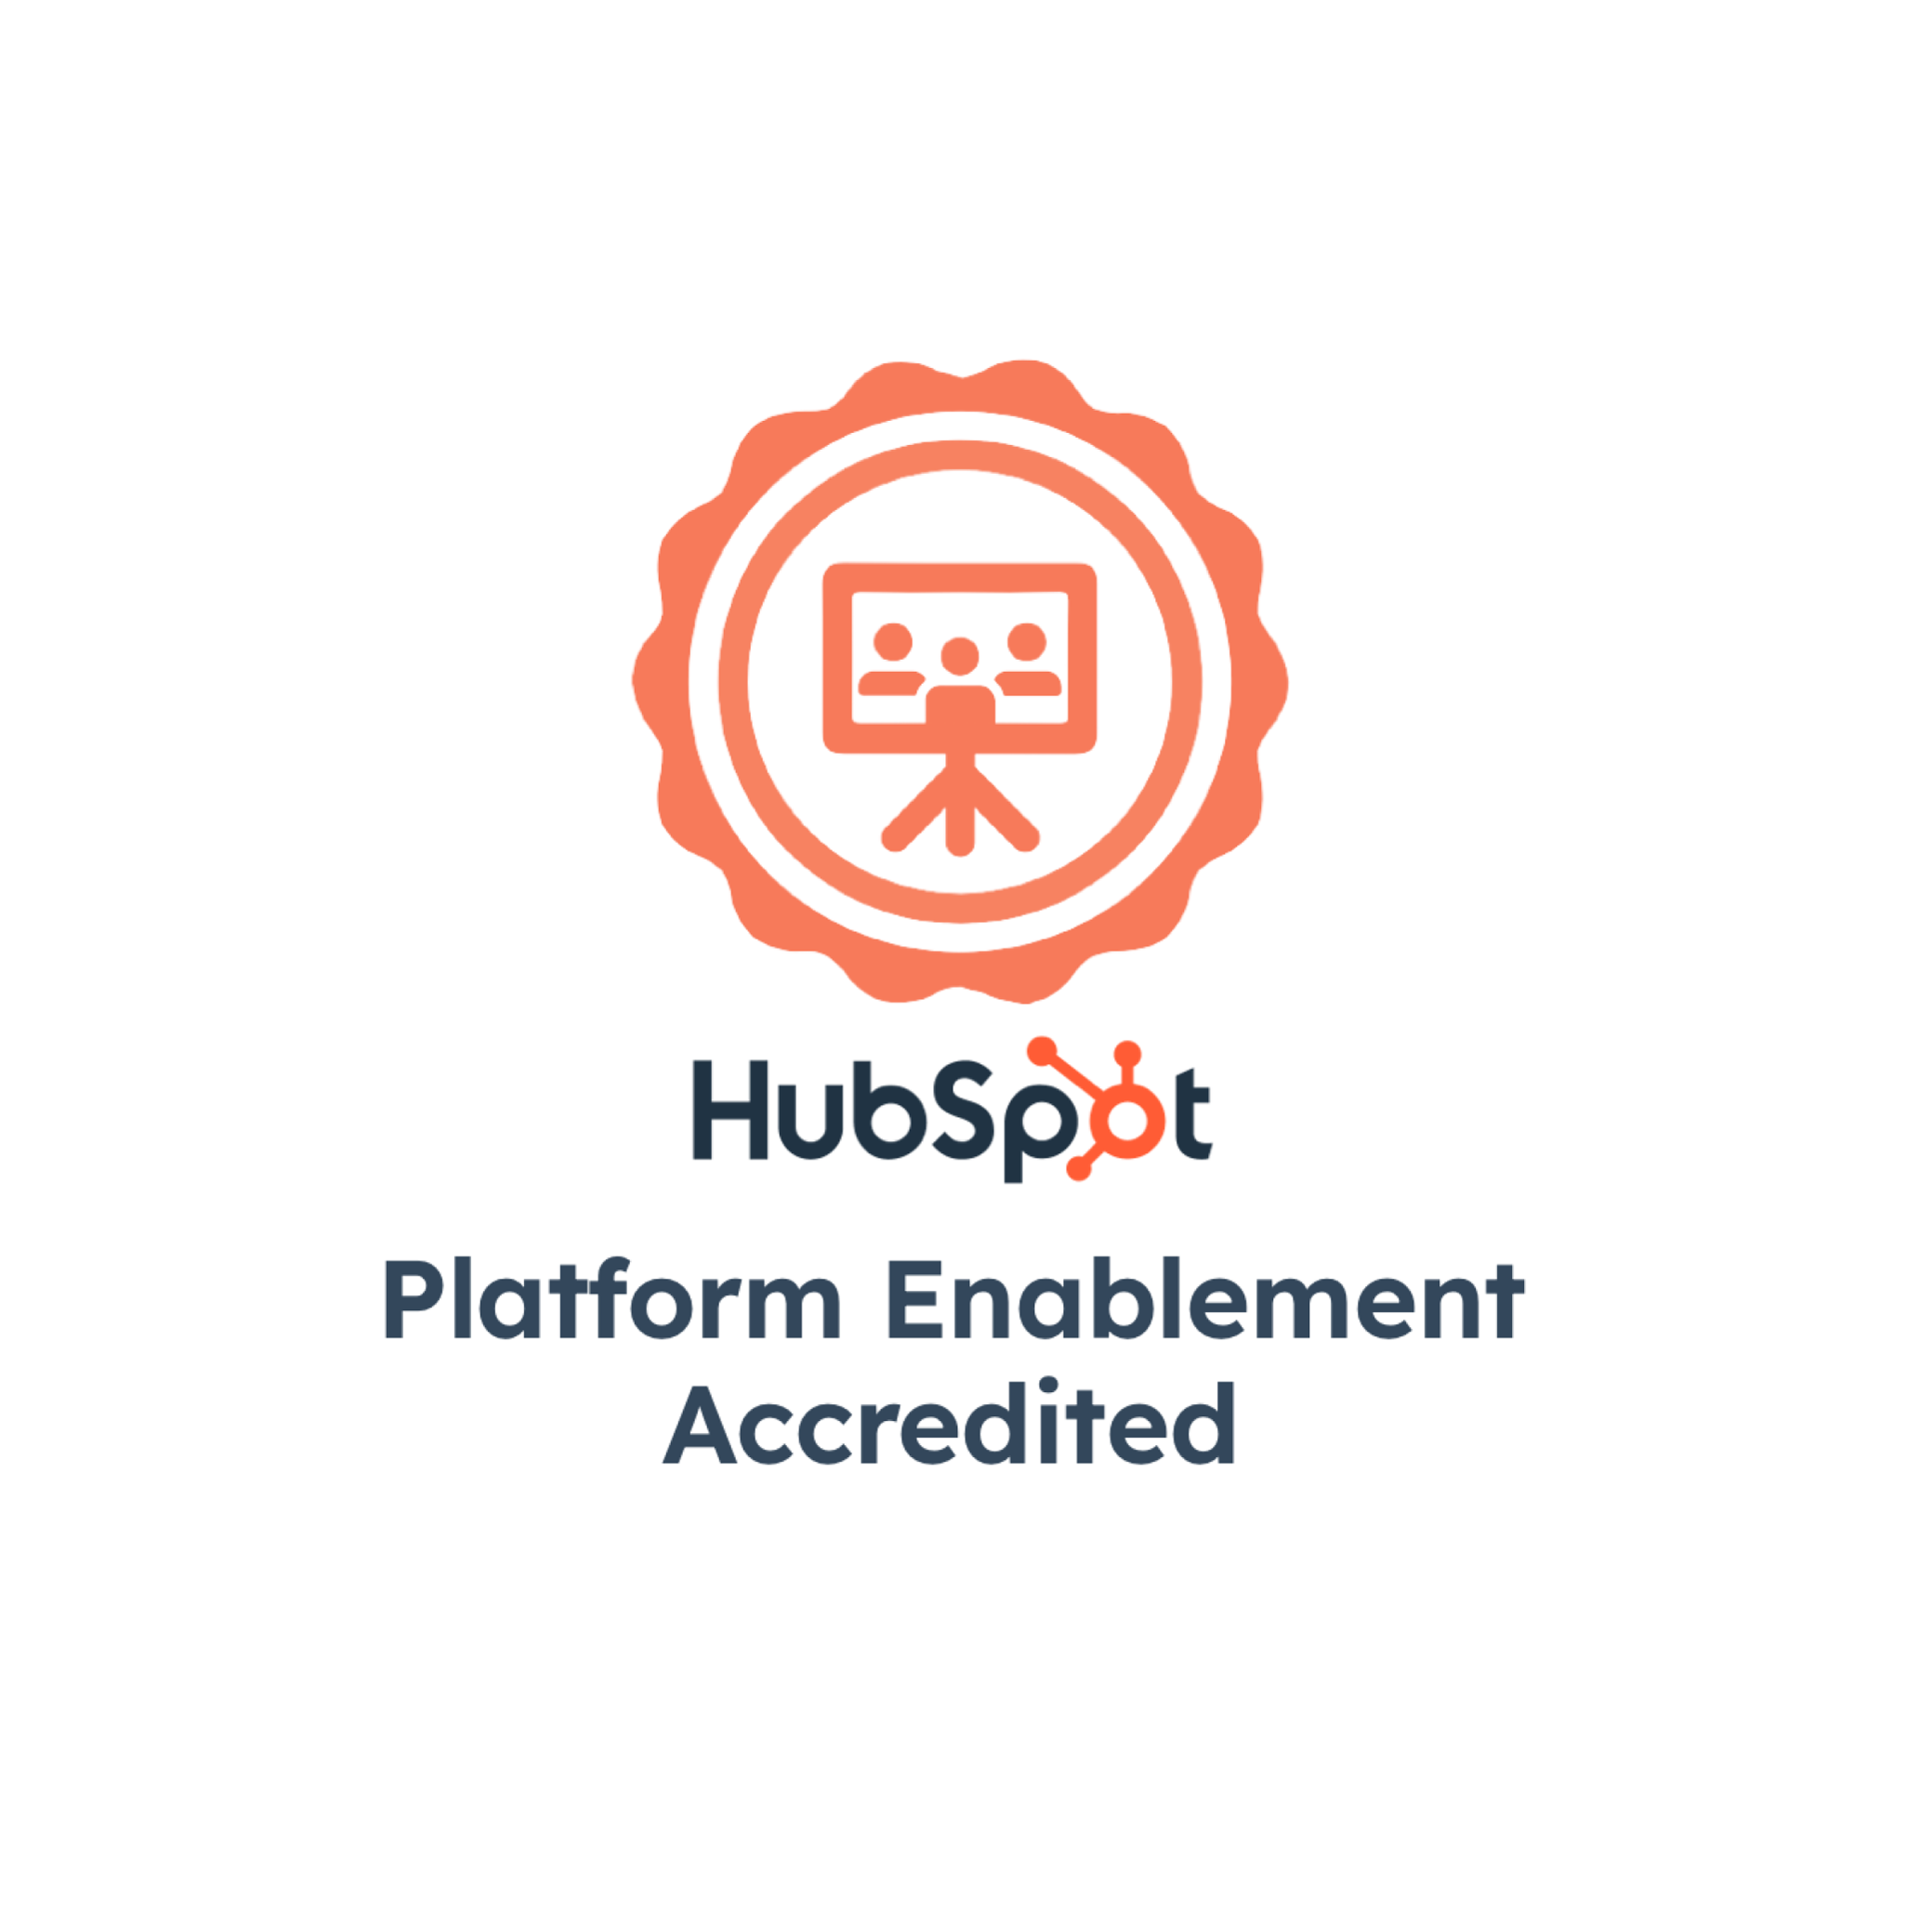 HubSpot Platform Enablement Accreditation